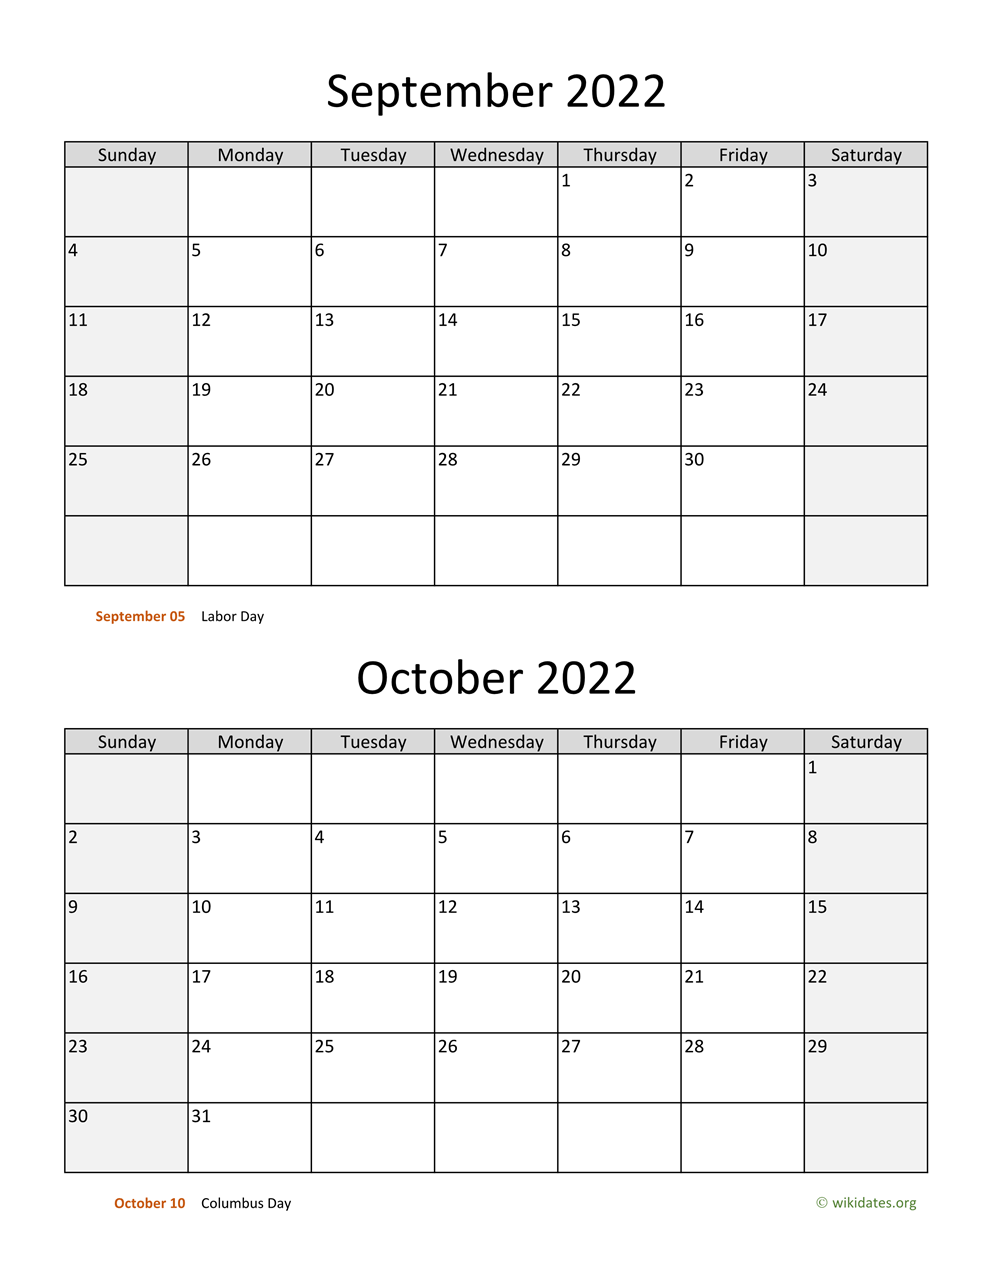 September October 2022 Calendar September And October 2022 Calendar | Wikidates.org